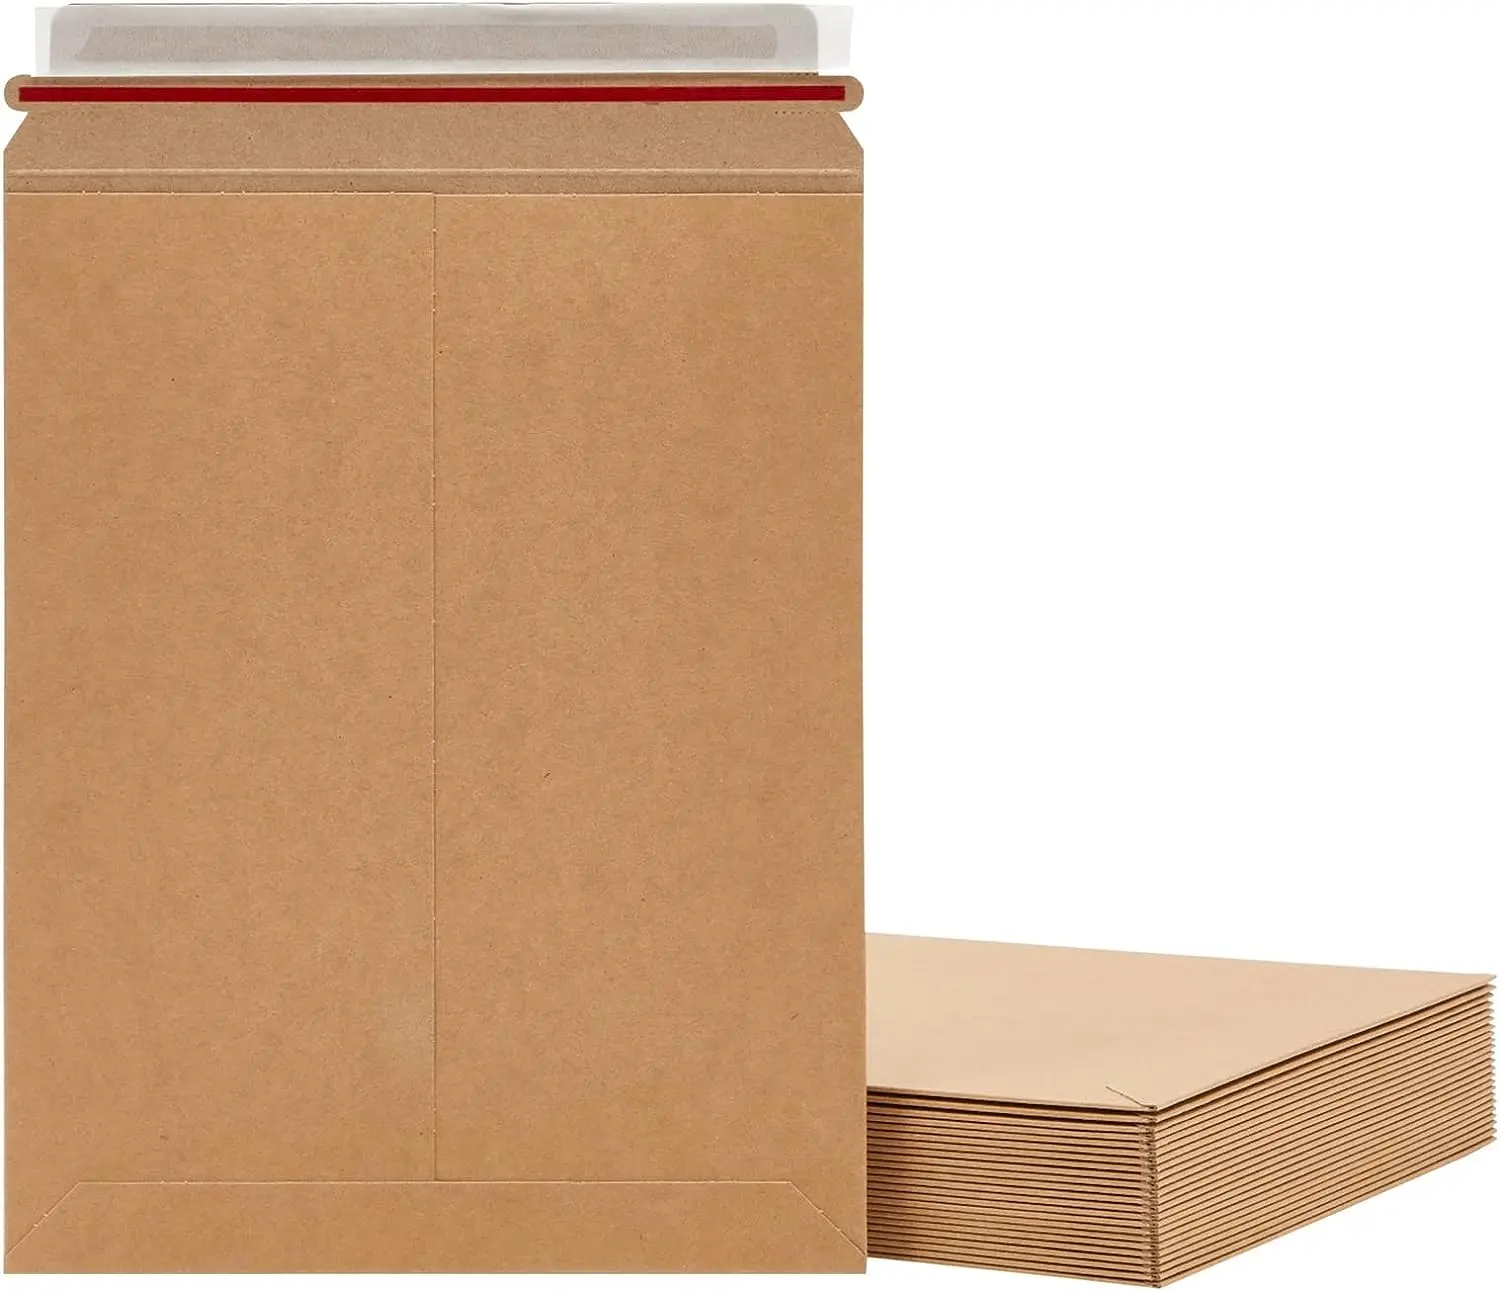 Custom Design Rigid Mailers Self Adhesive Flat Cardboard Mailers Bulk Photo Cardboard Envelopes for Mailing Shipping Document